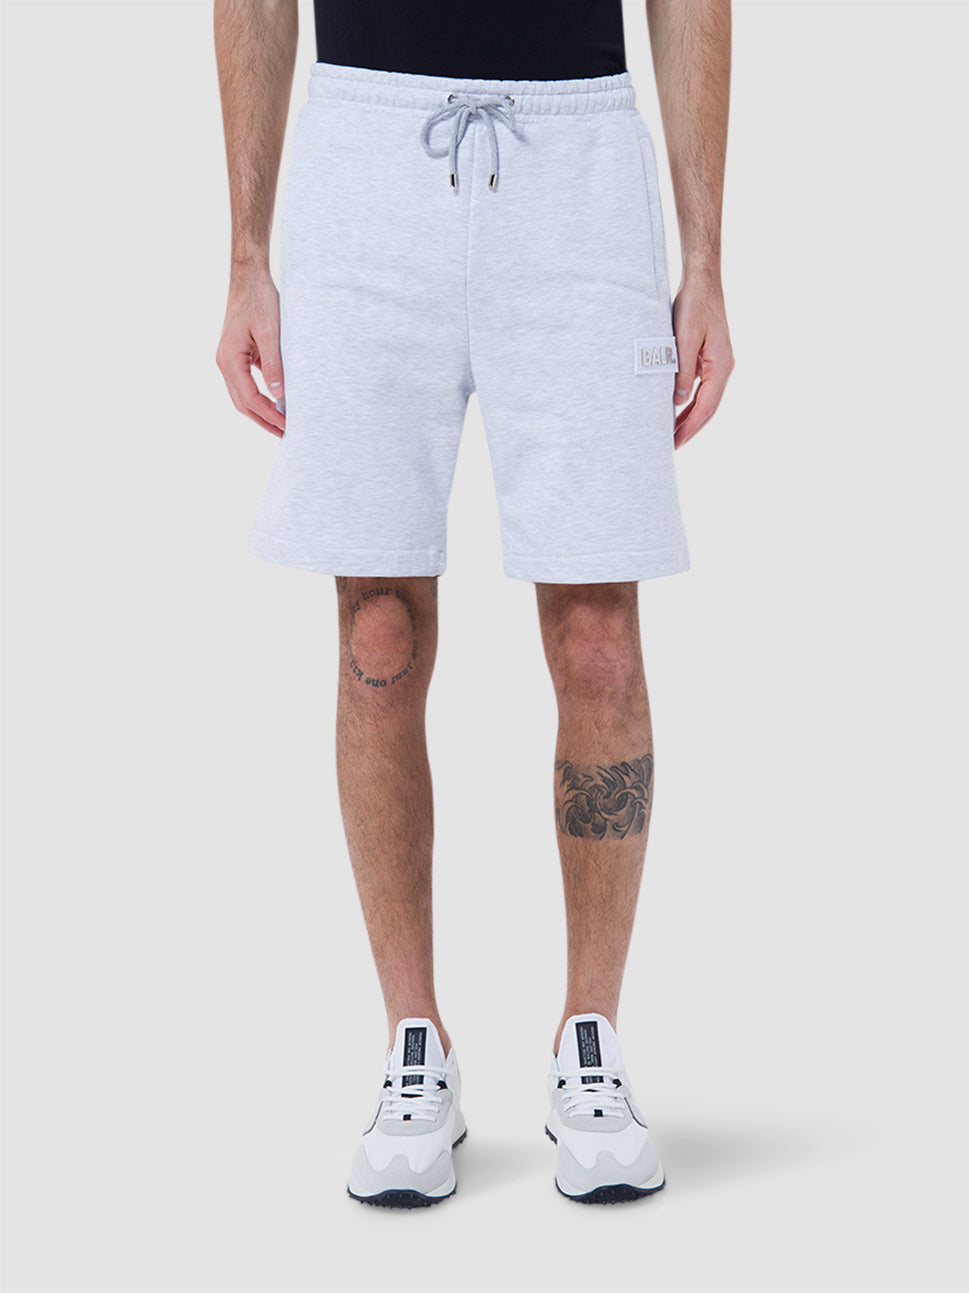 Shop the latest trending Light Grey Heather color Balr Shorts